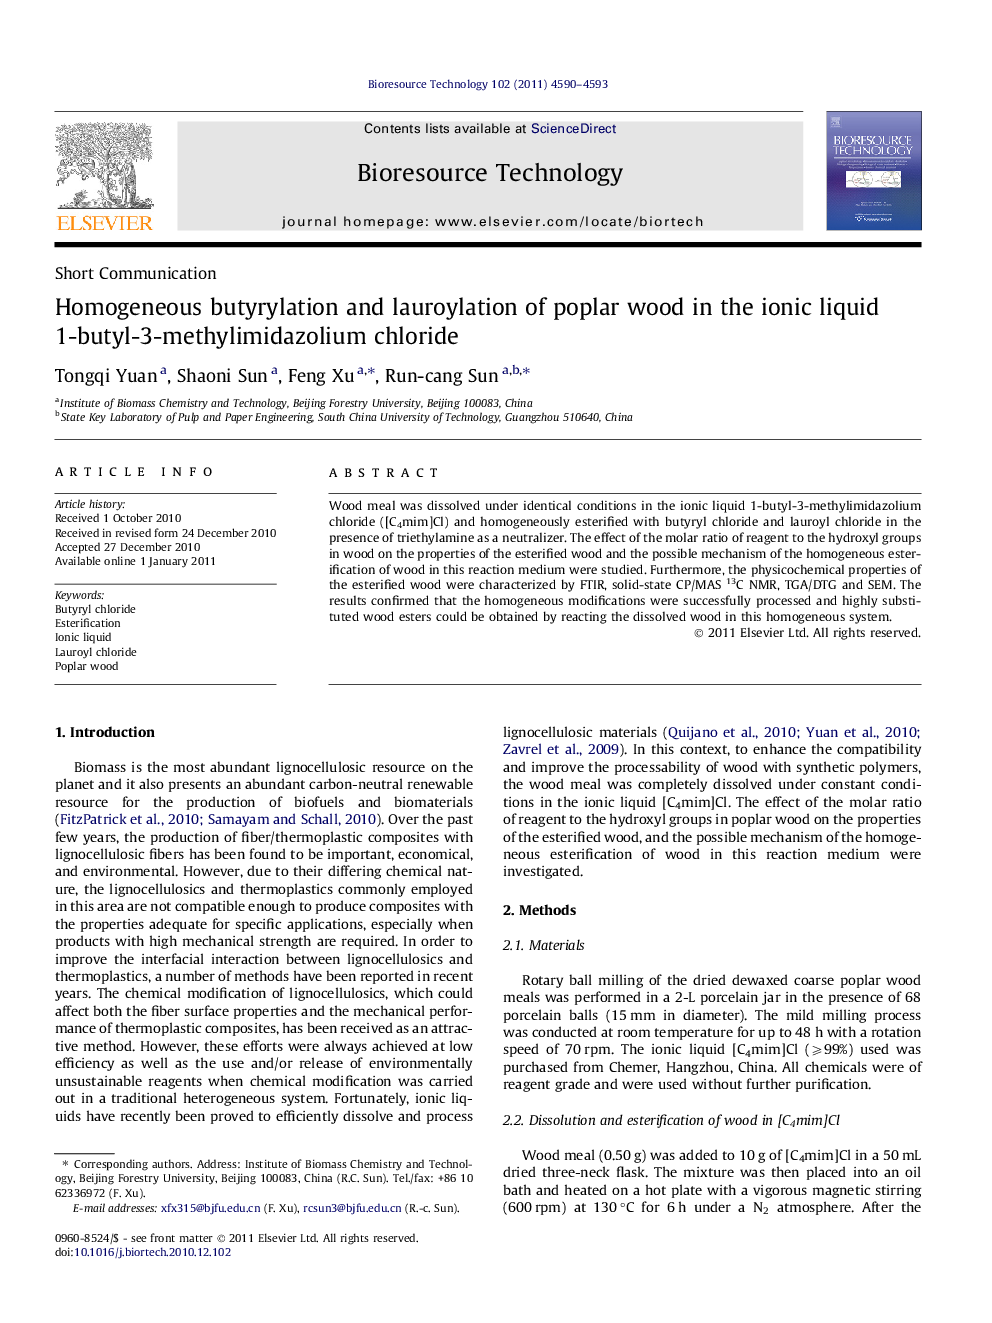 Homogeneous butyrylation and lauroylation of poplar wood in the ionic liquid 1-butyl-3-methylimidazolium chloride